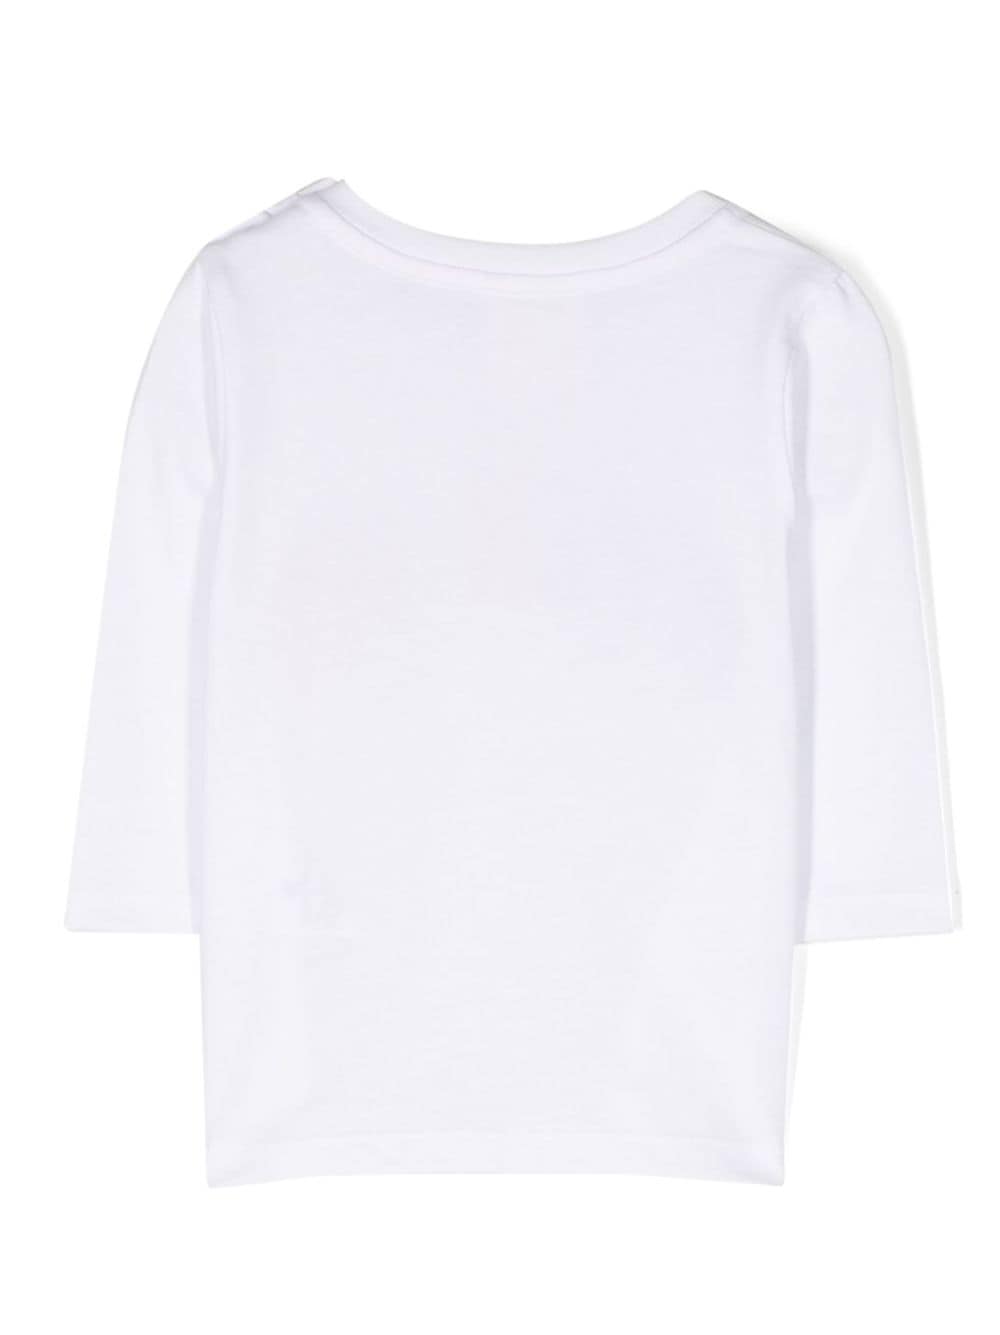 T-shirt bianca a maniche lunghe con ricamo - Rubino Kids